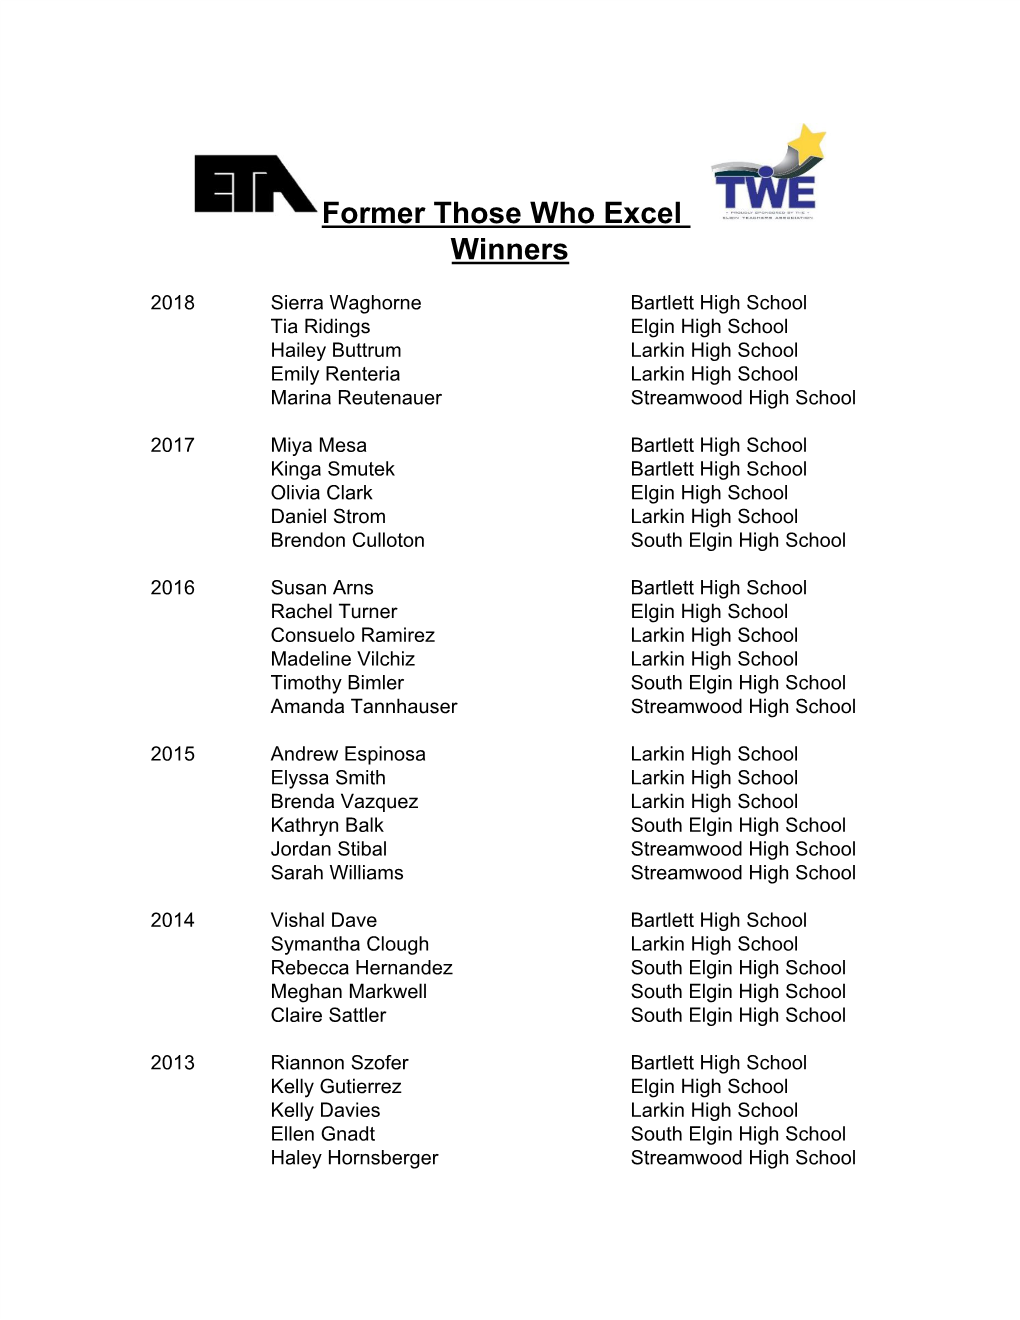 History of TWE Scholarship Winners